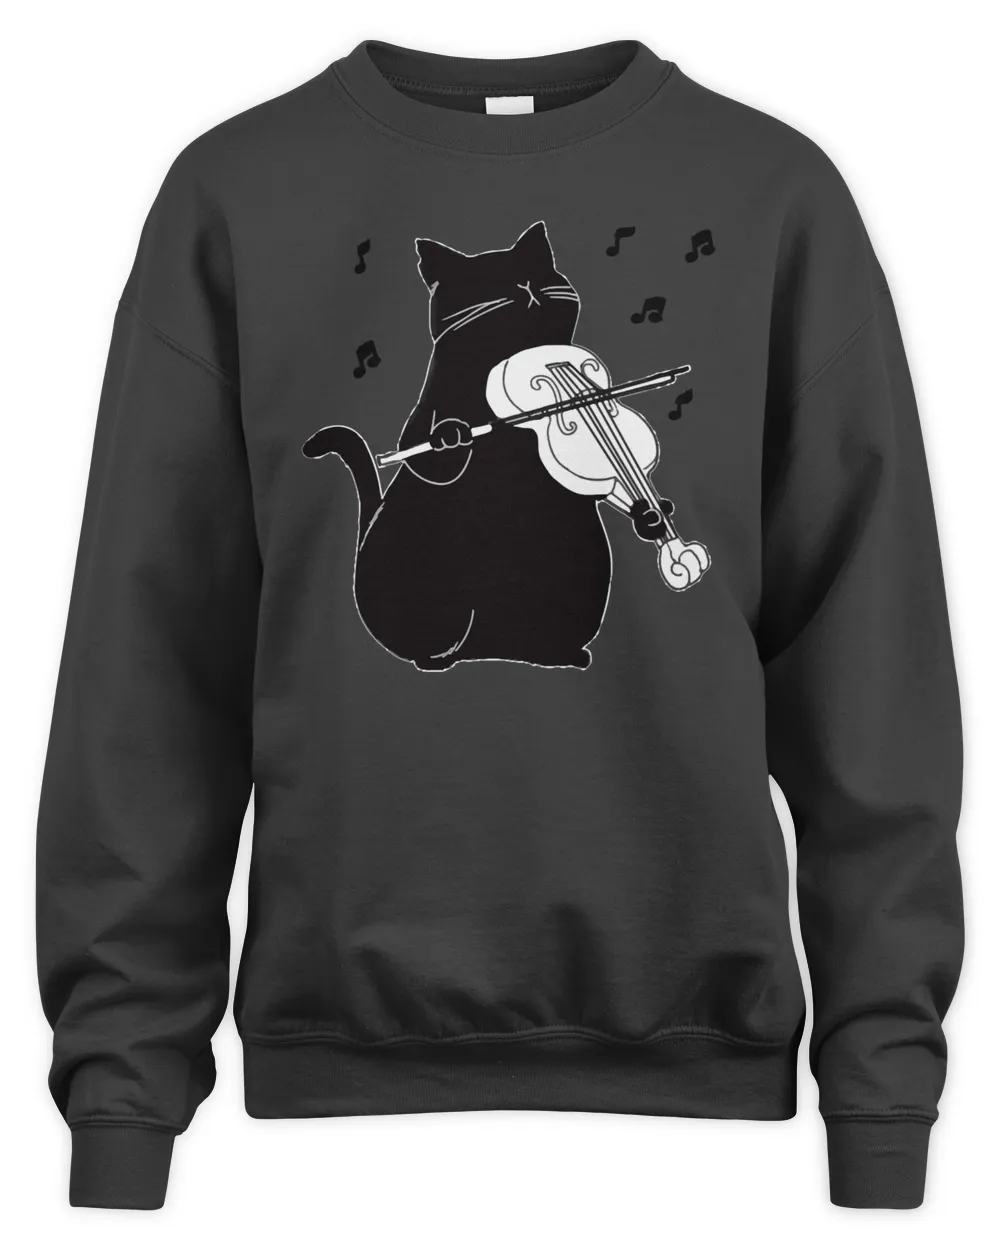 Black Cat Music Black Cat Playing Violin Funny ian126 musician Kitty Kitten